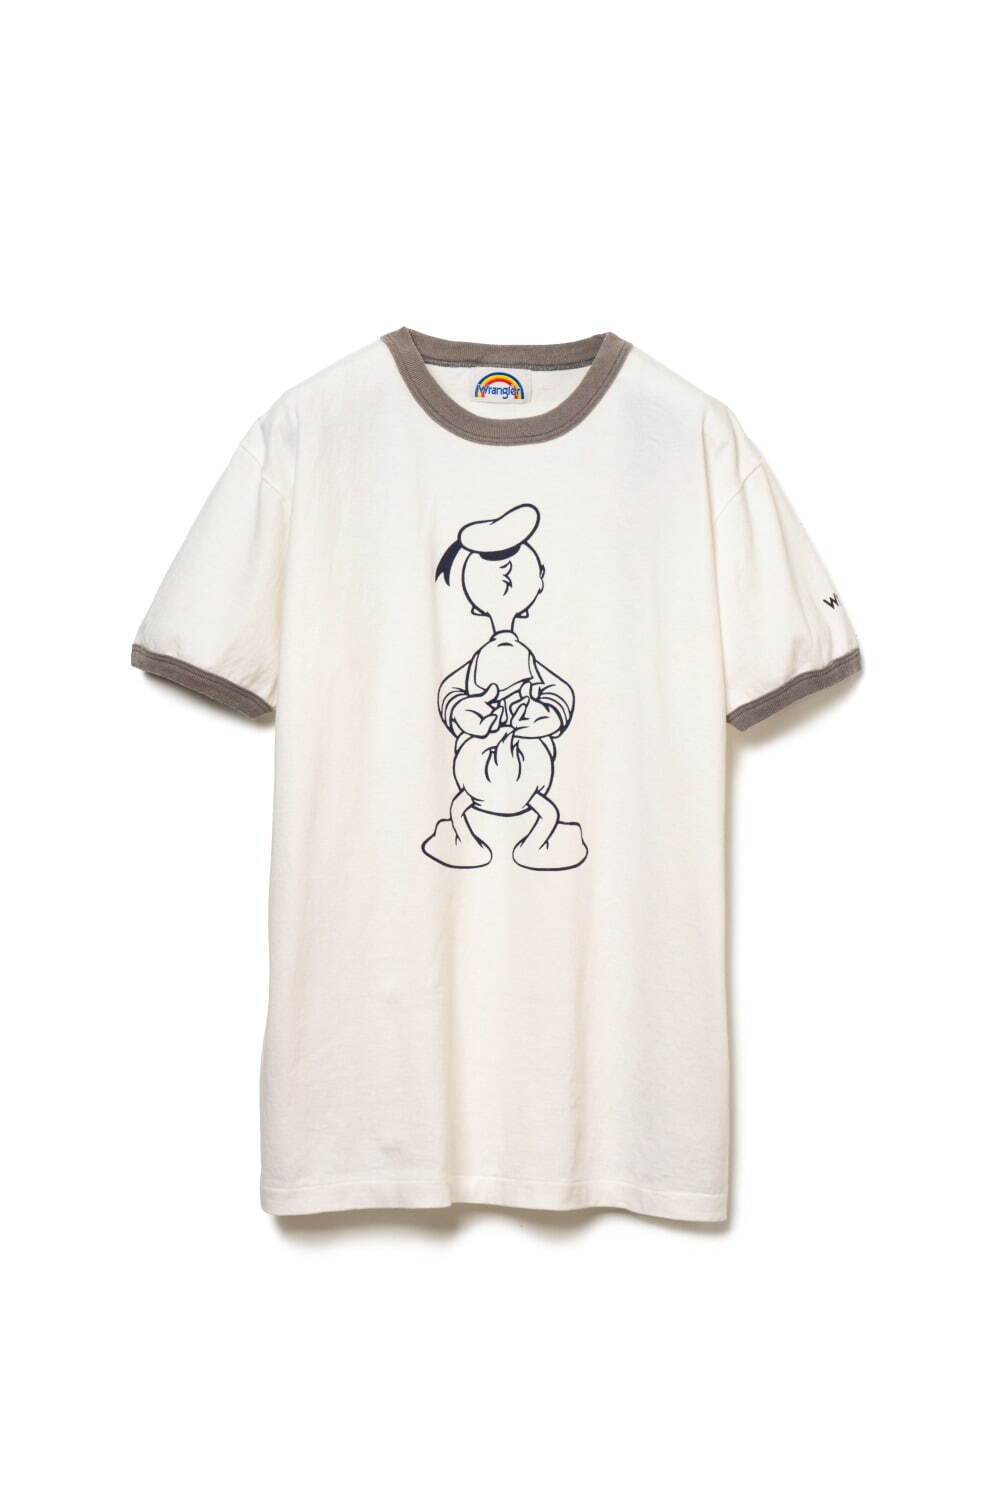 Tシャツ 7,700円